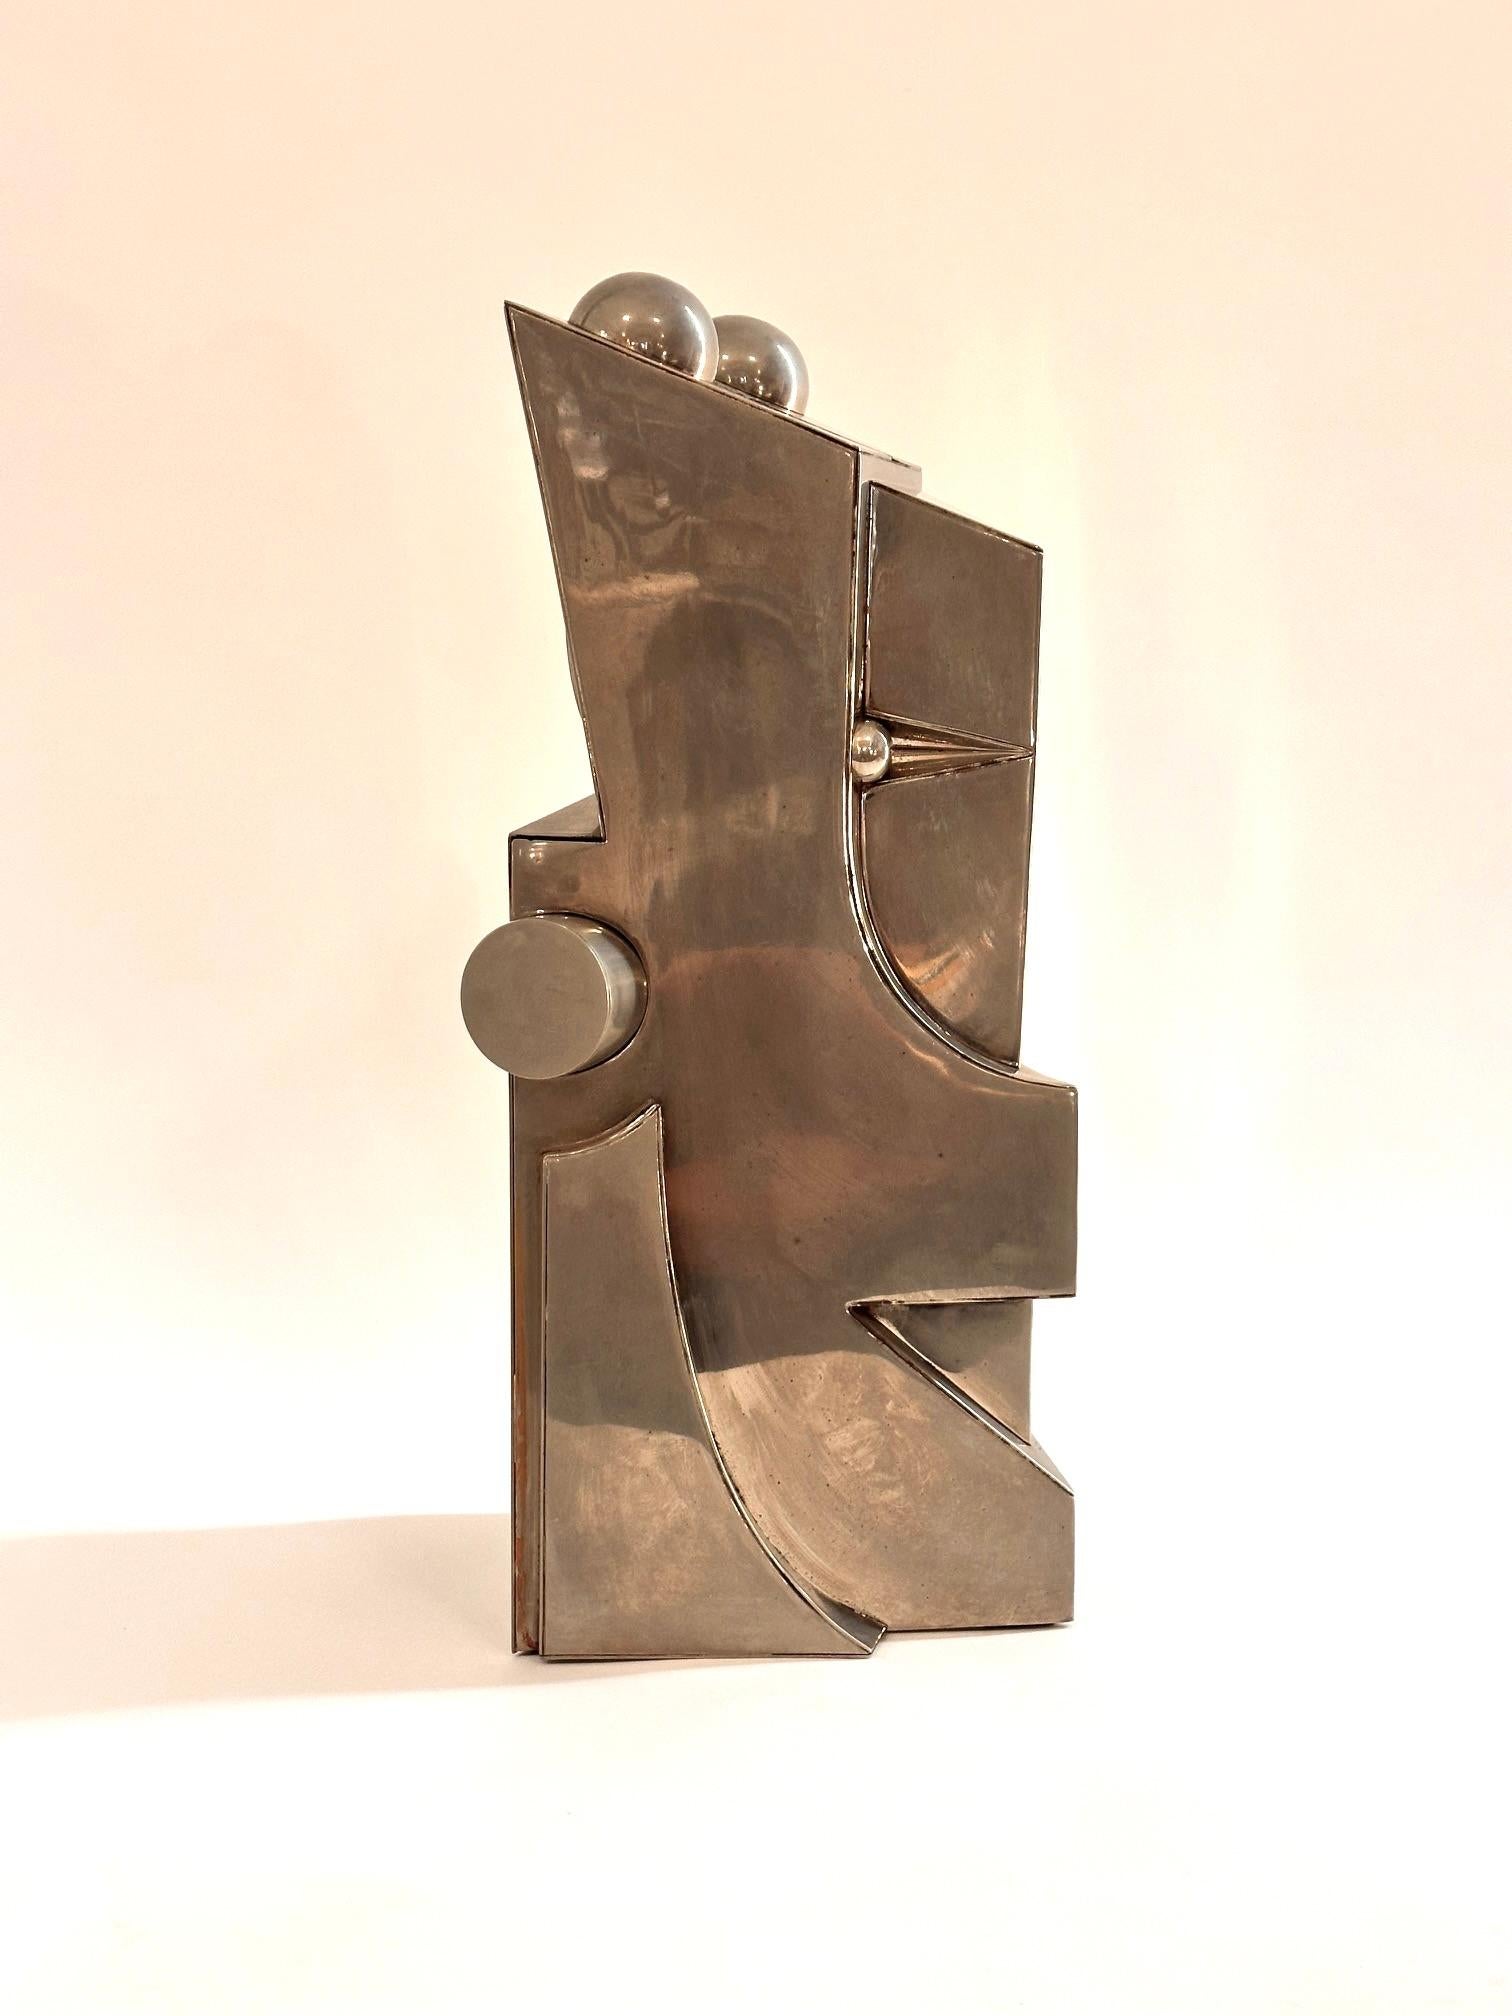 Moderne Sculpture abstraite en acier poli « Astar » de Franz T. Sartori, Italie, 1974 en vente